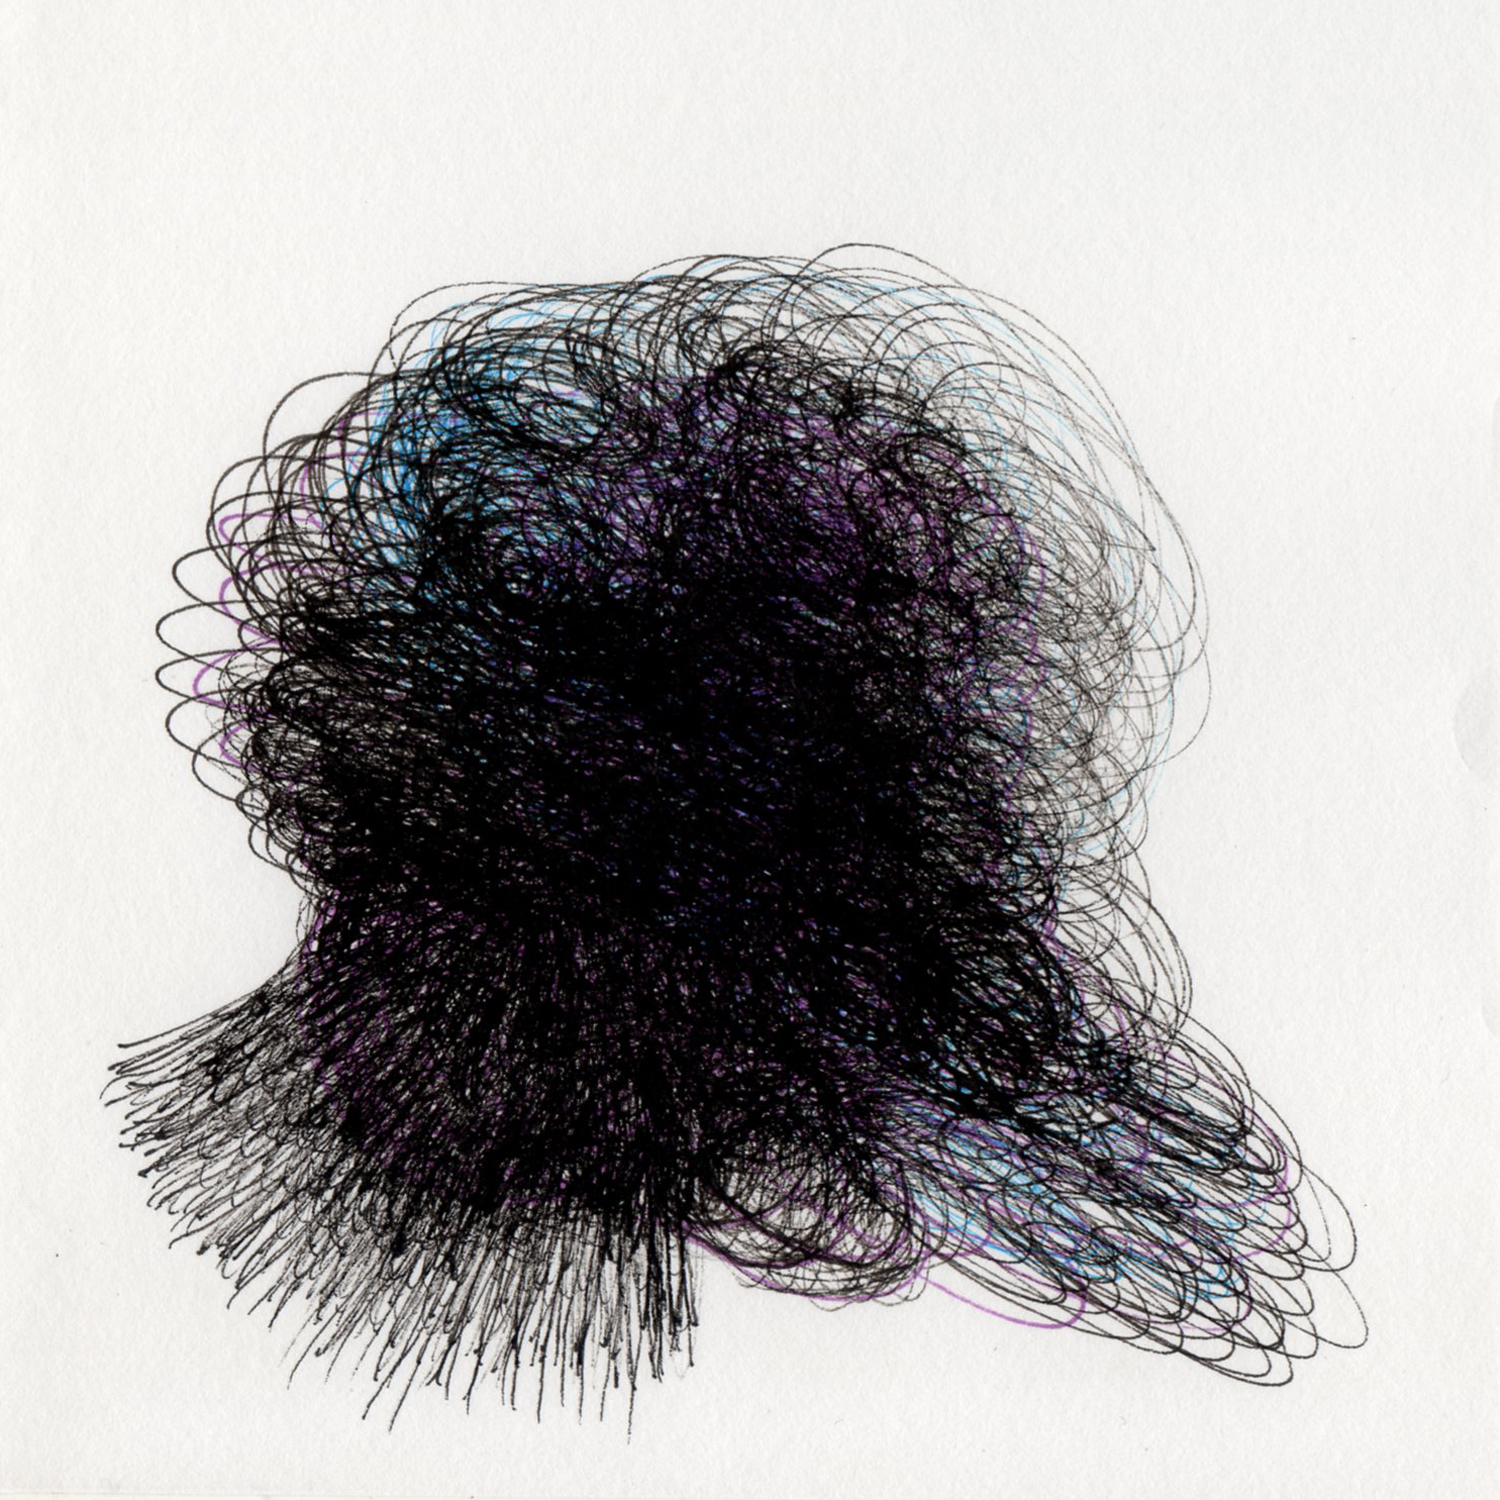   blob 13  pen on paper 5” x 5” 2014 